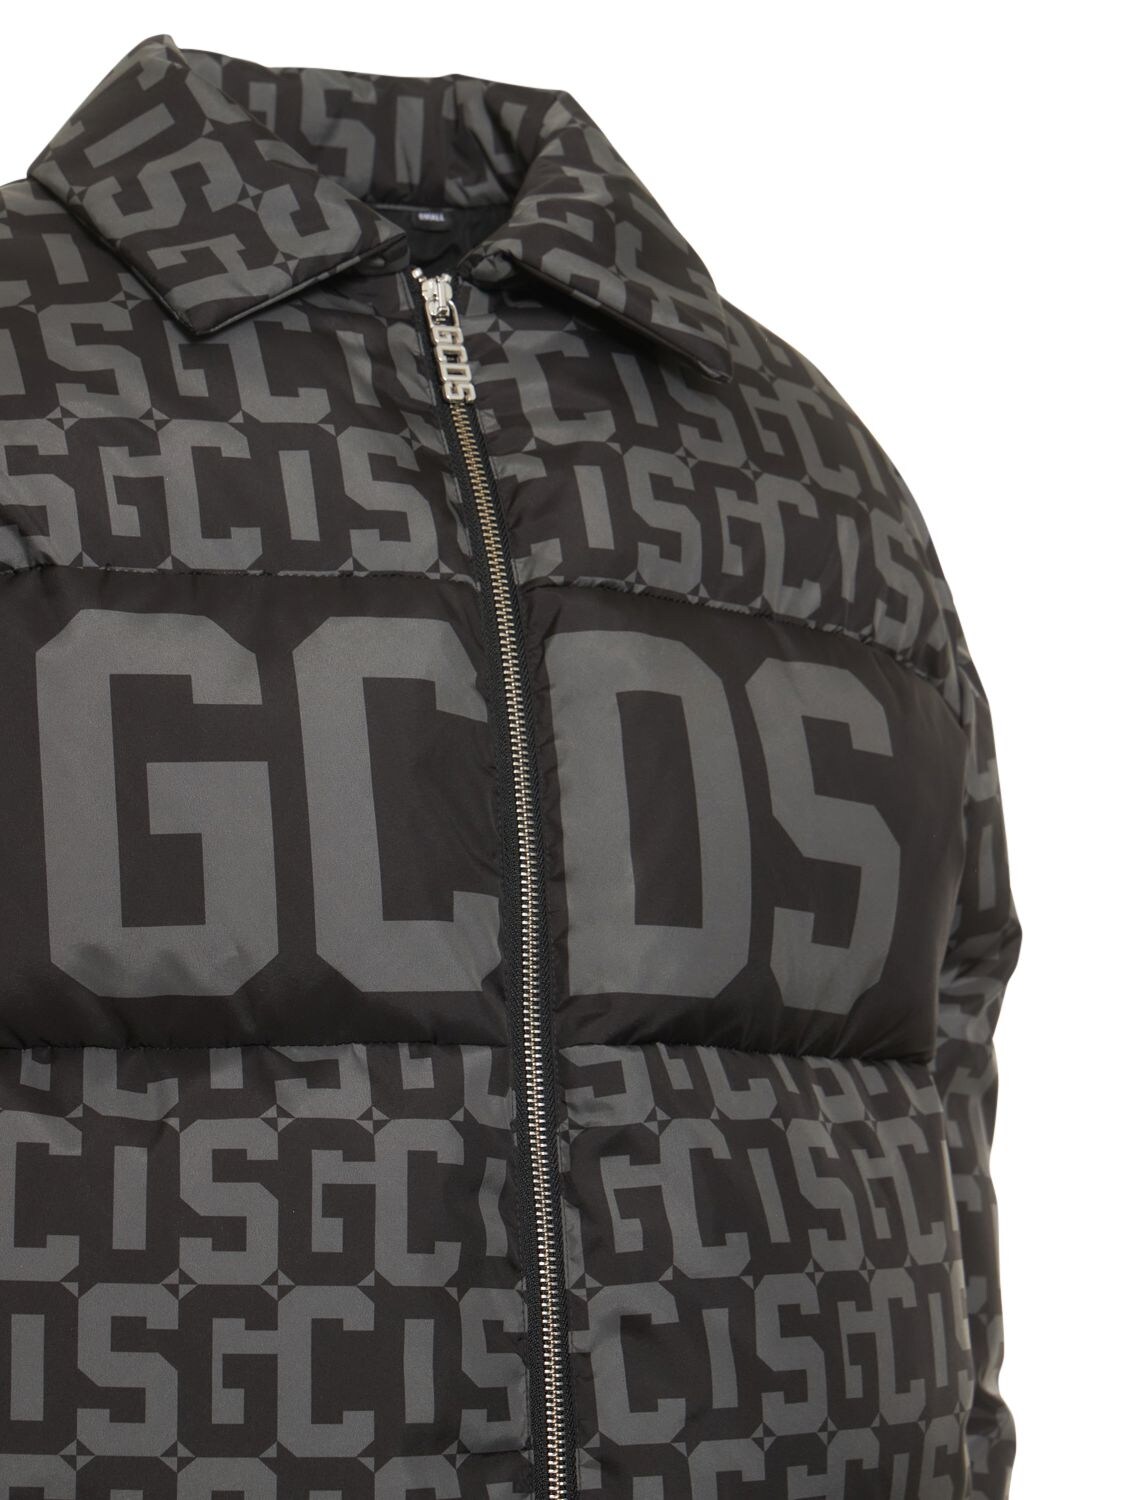 Gcds monogram-print Cropped Puffer Jacket - Farfetch